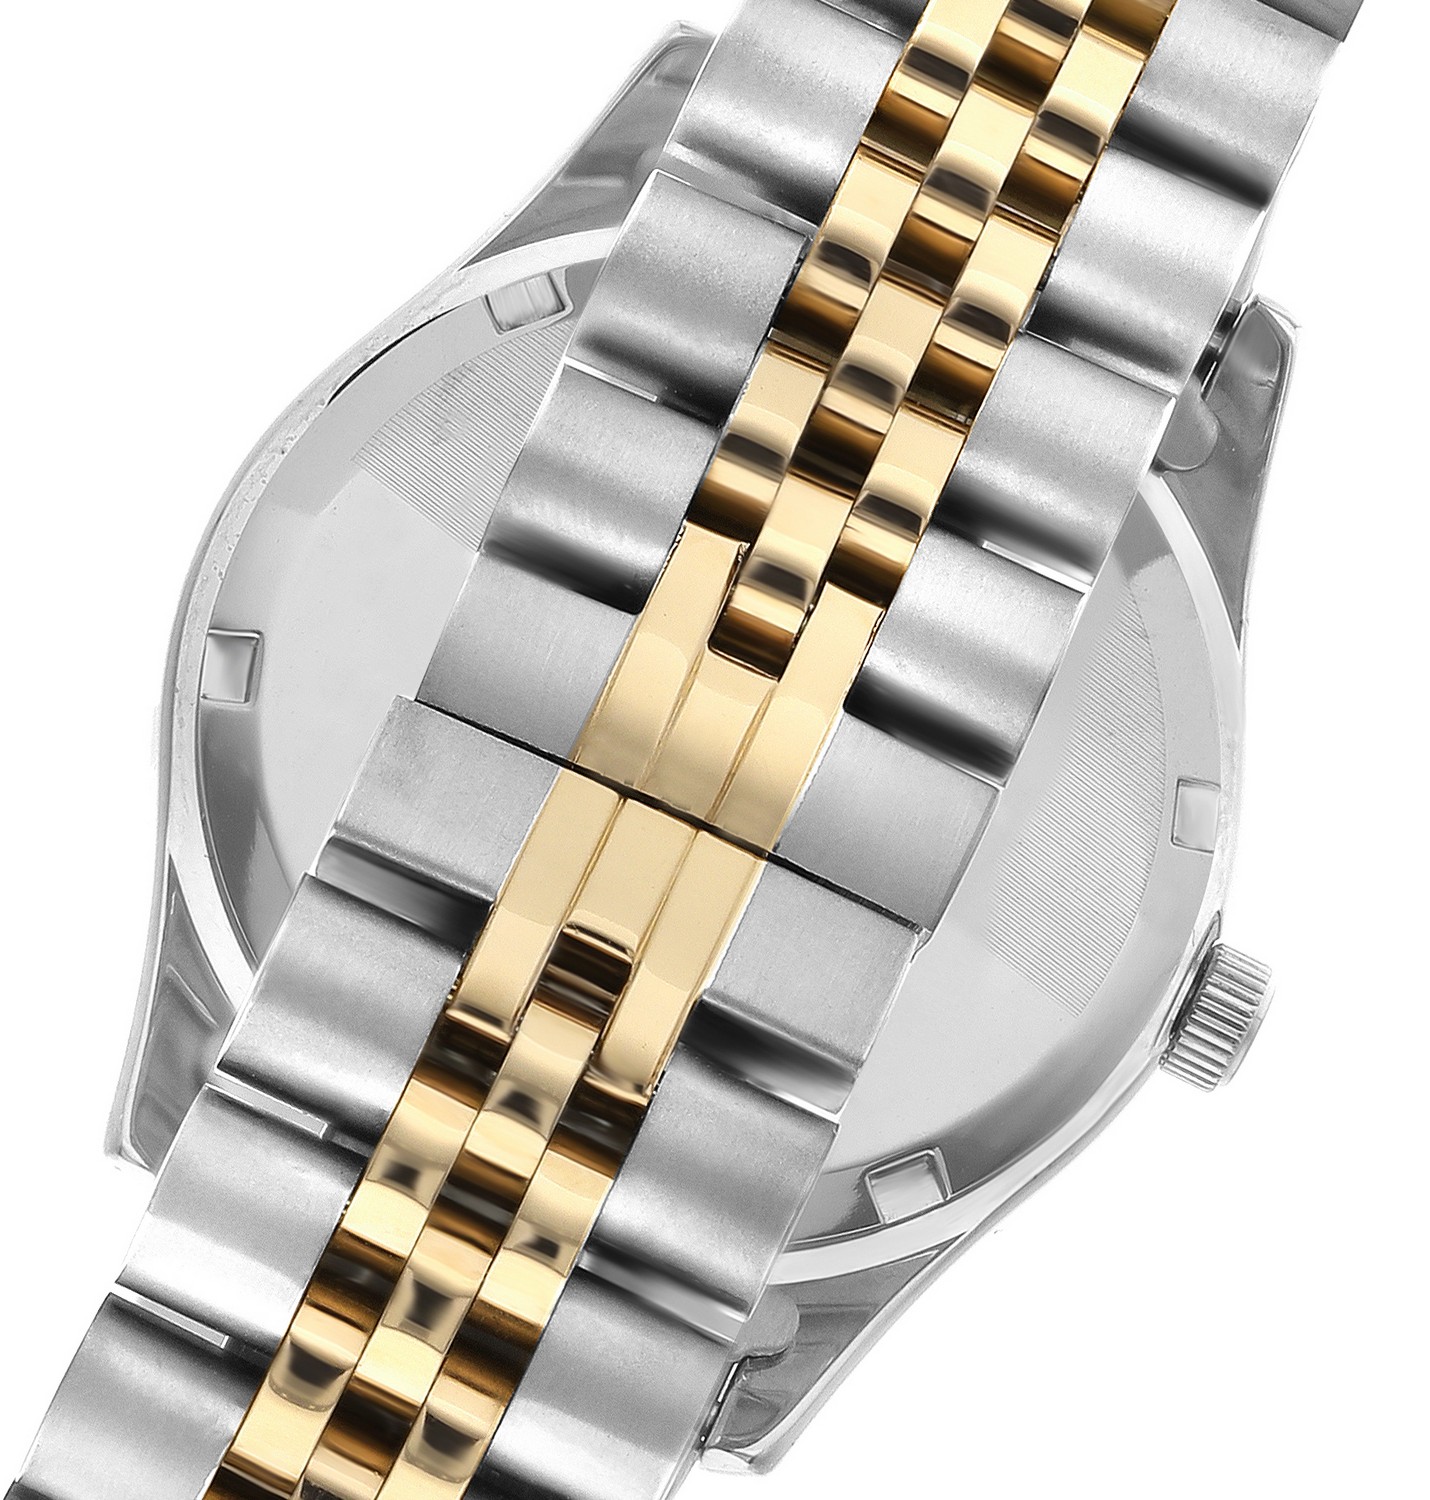 BEVERLY HILLS POLO CLUB  Женские часы, кварцевый механизм, суперметалл с покрытием, 34 мм